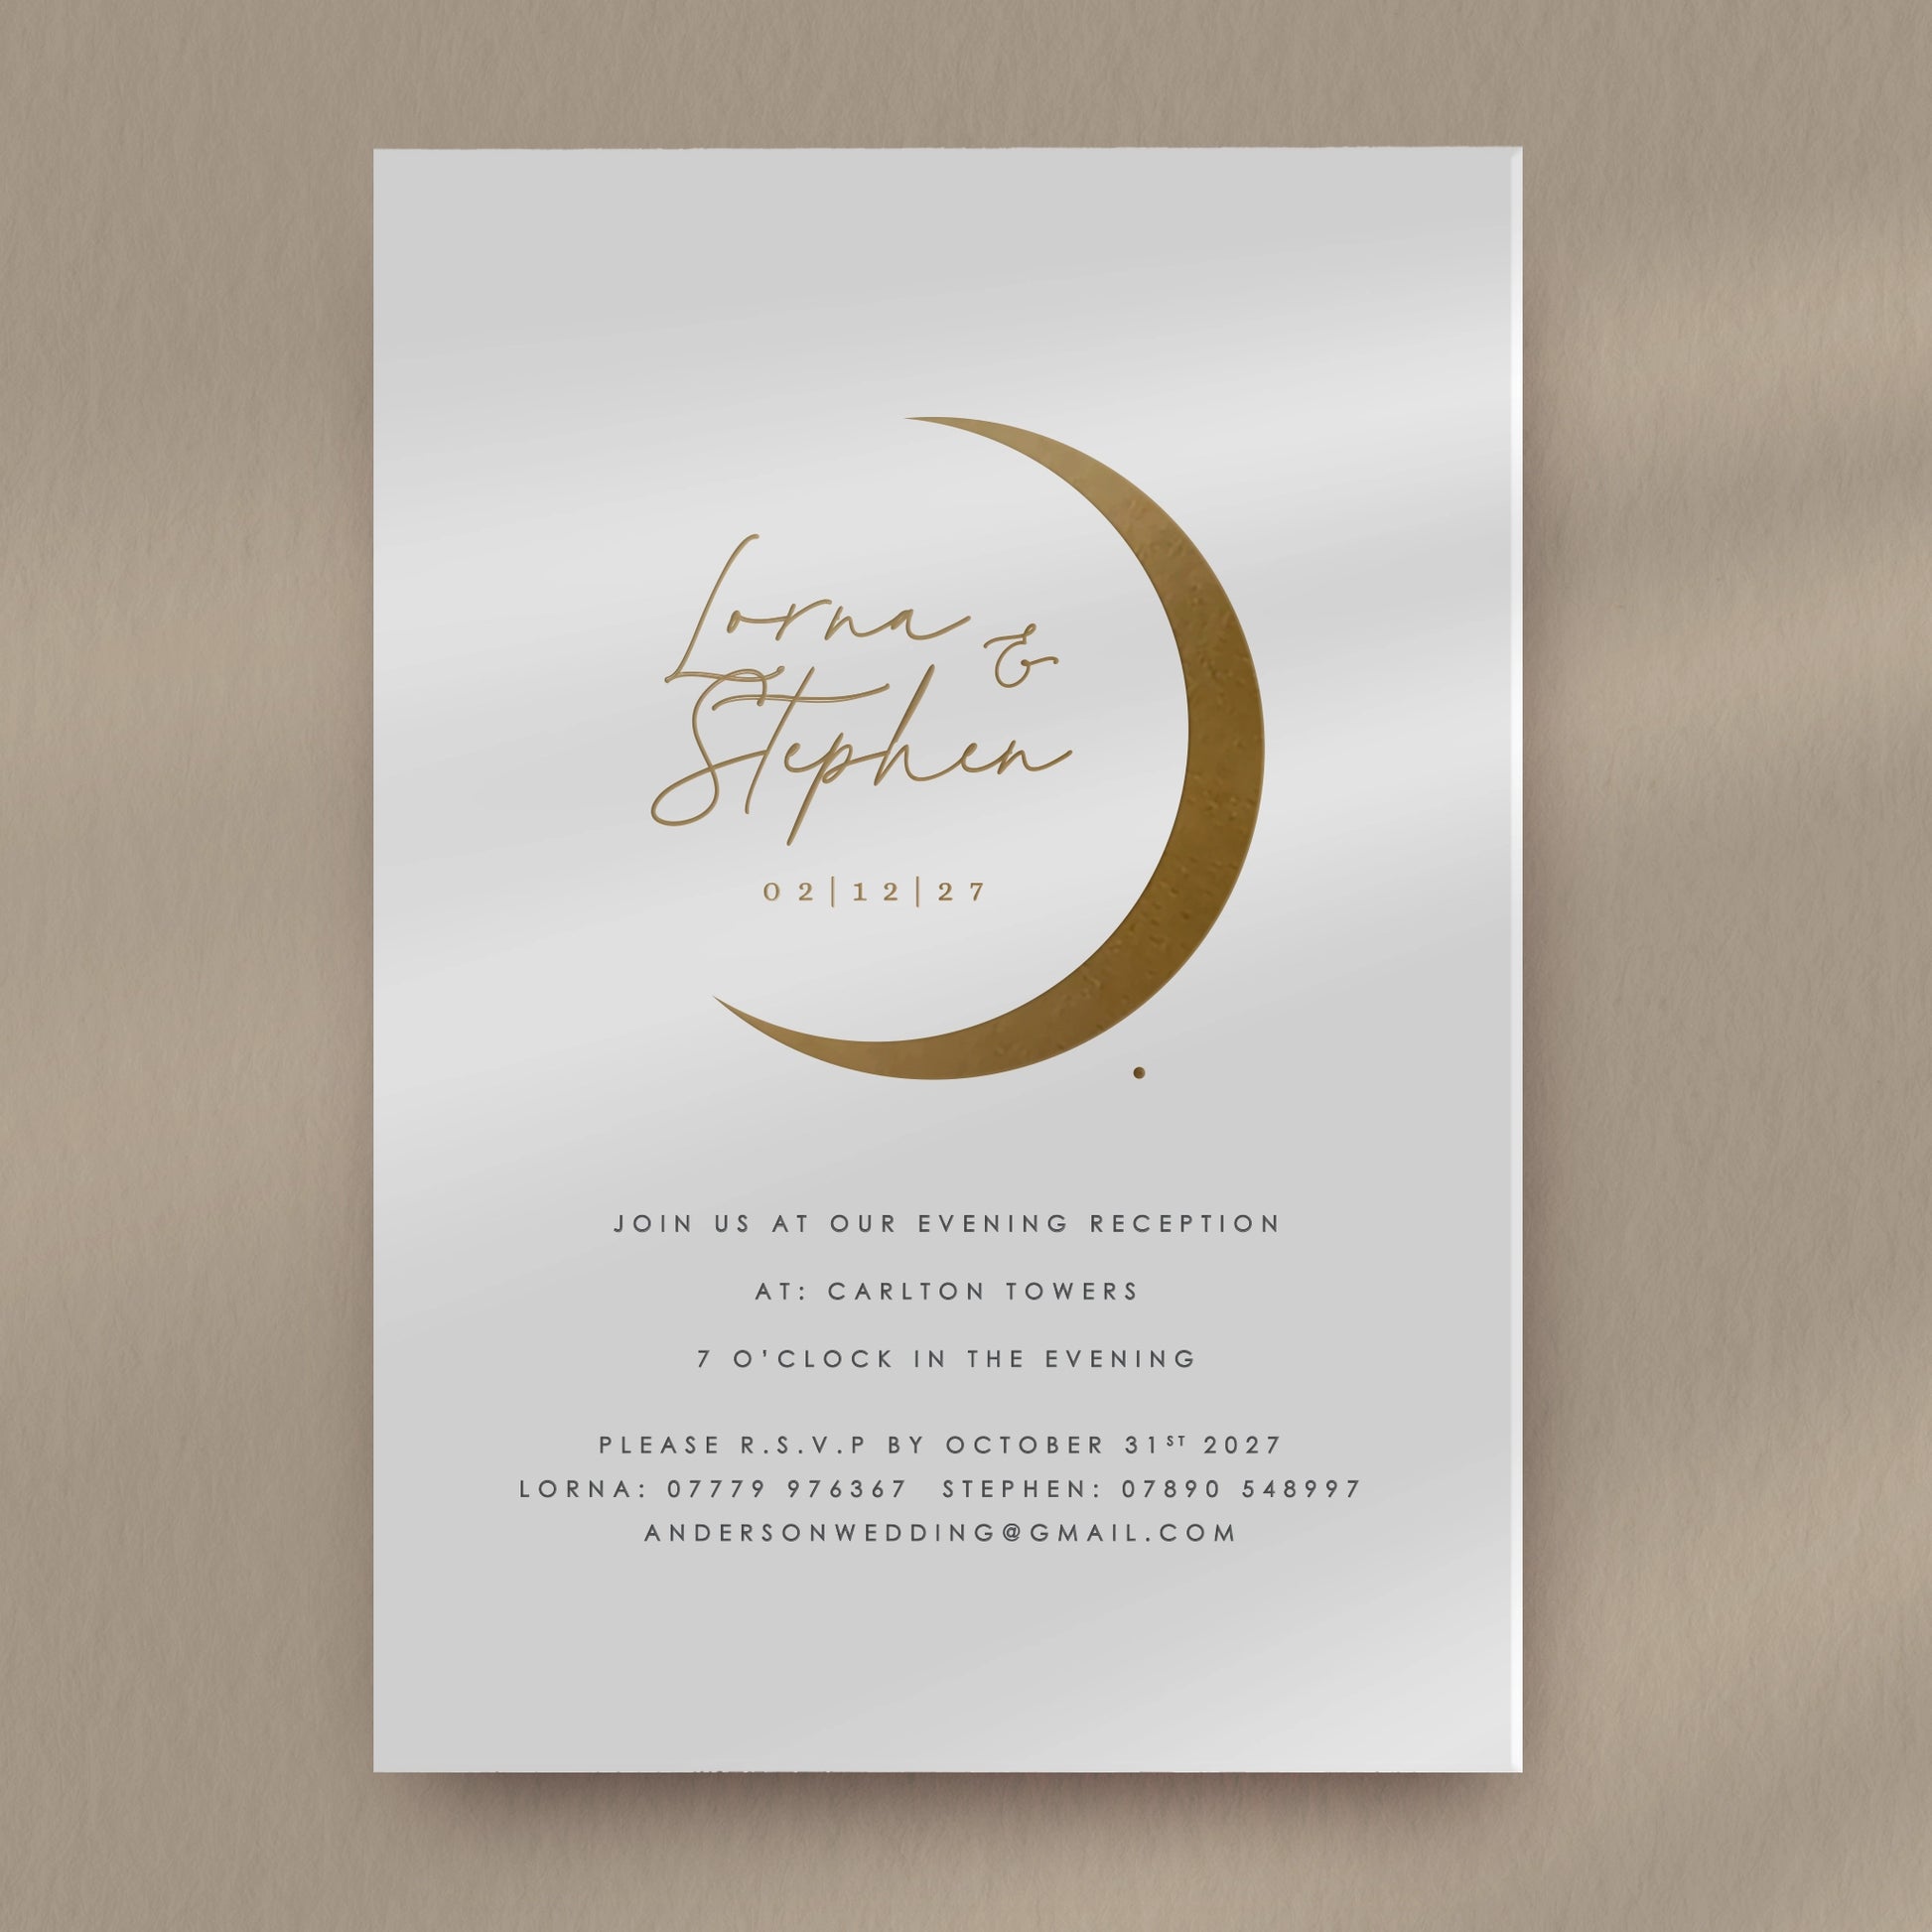 Evening Invitation Sample  Ivy and Gold Wedding Stationery Lorna  